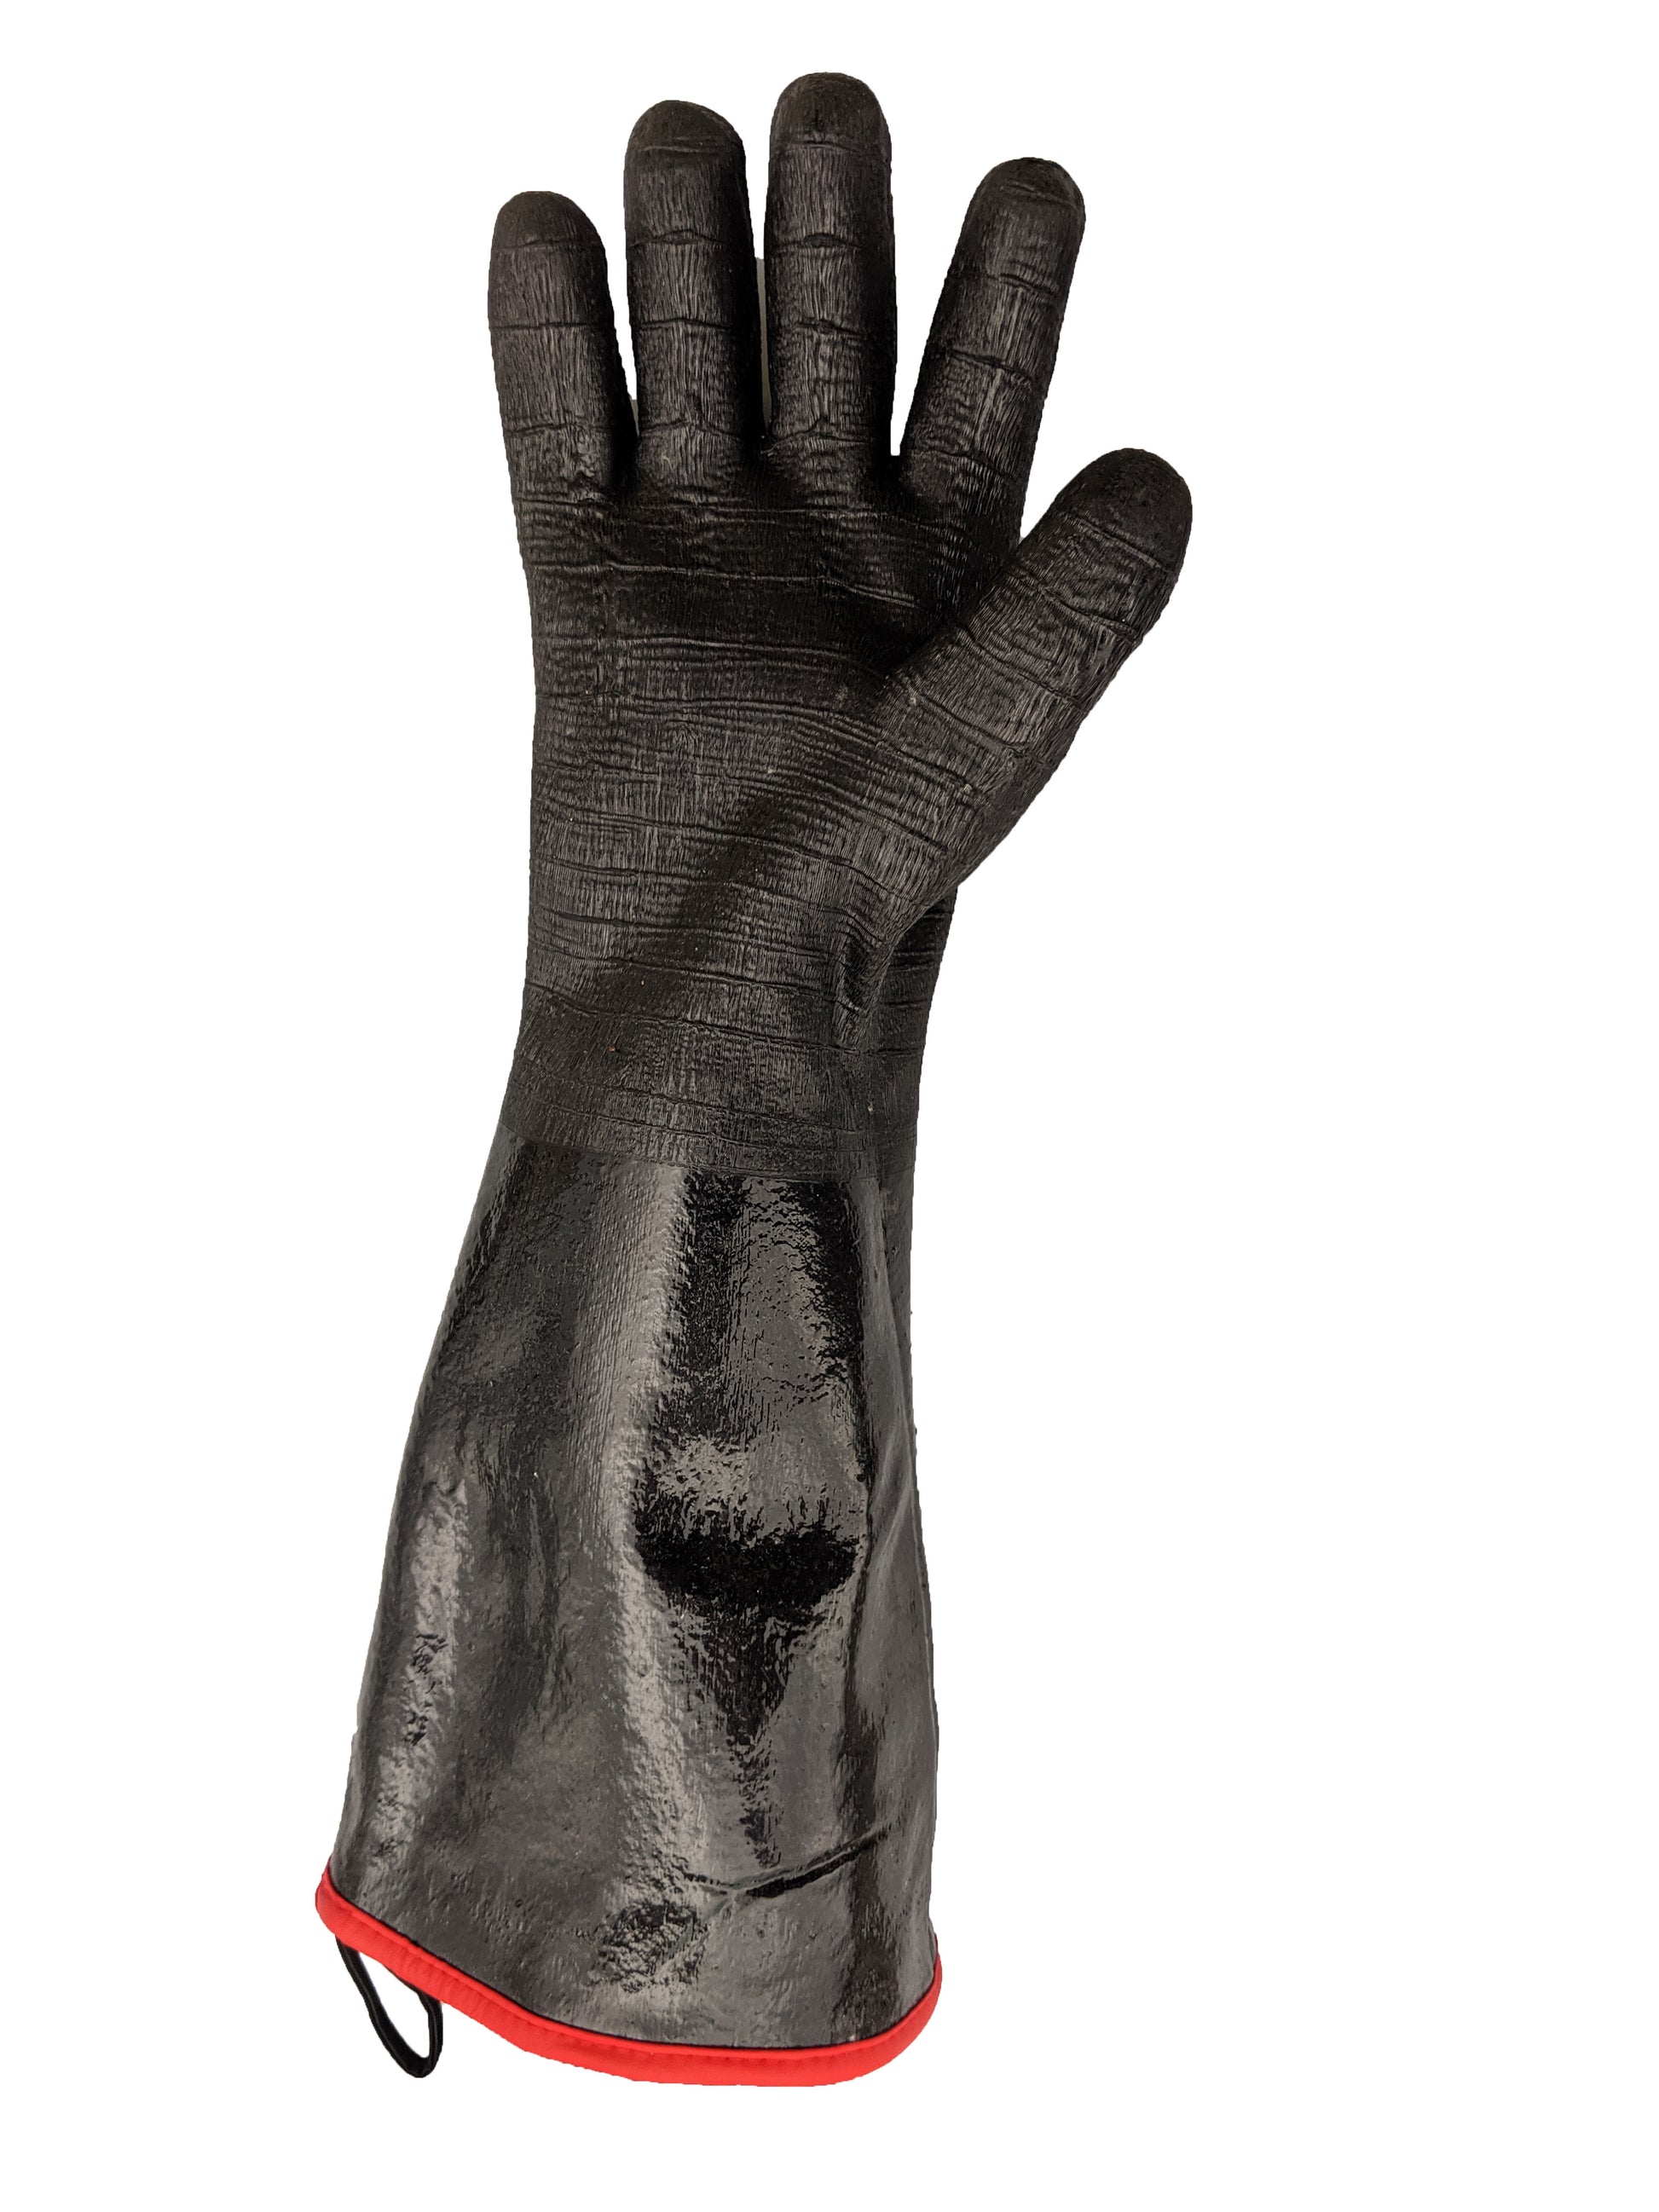 99185 Oil Shield®, 18 High Temp Insulated Neoprene Gloves - Mens Sizes S-XL